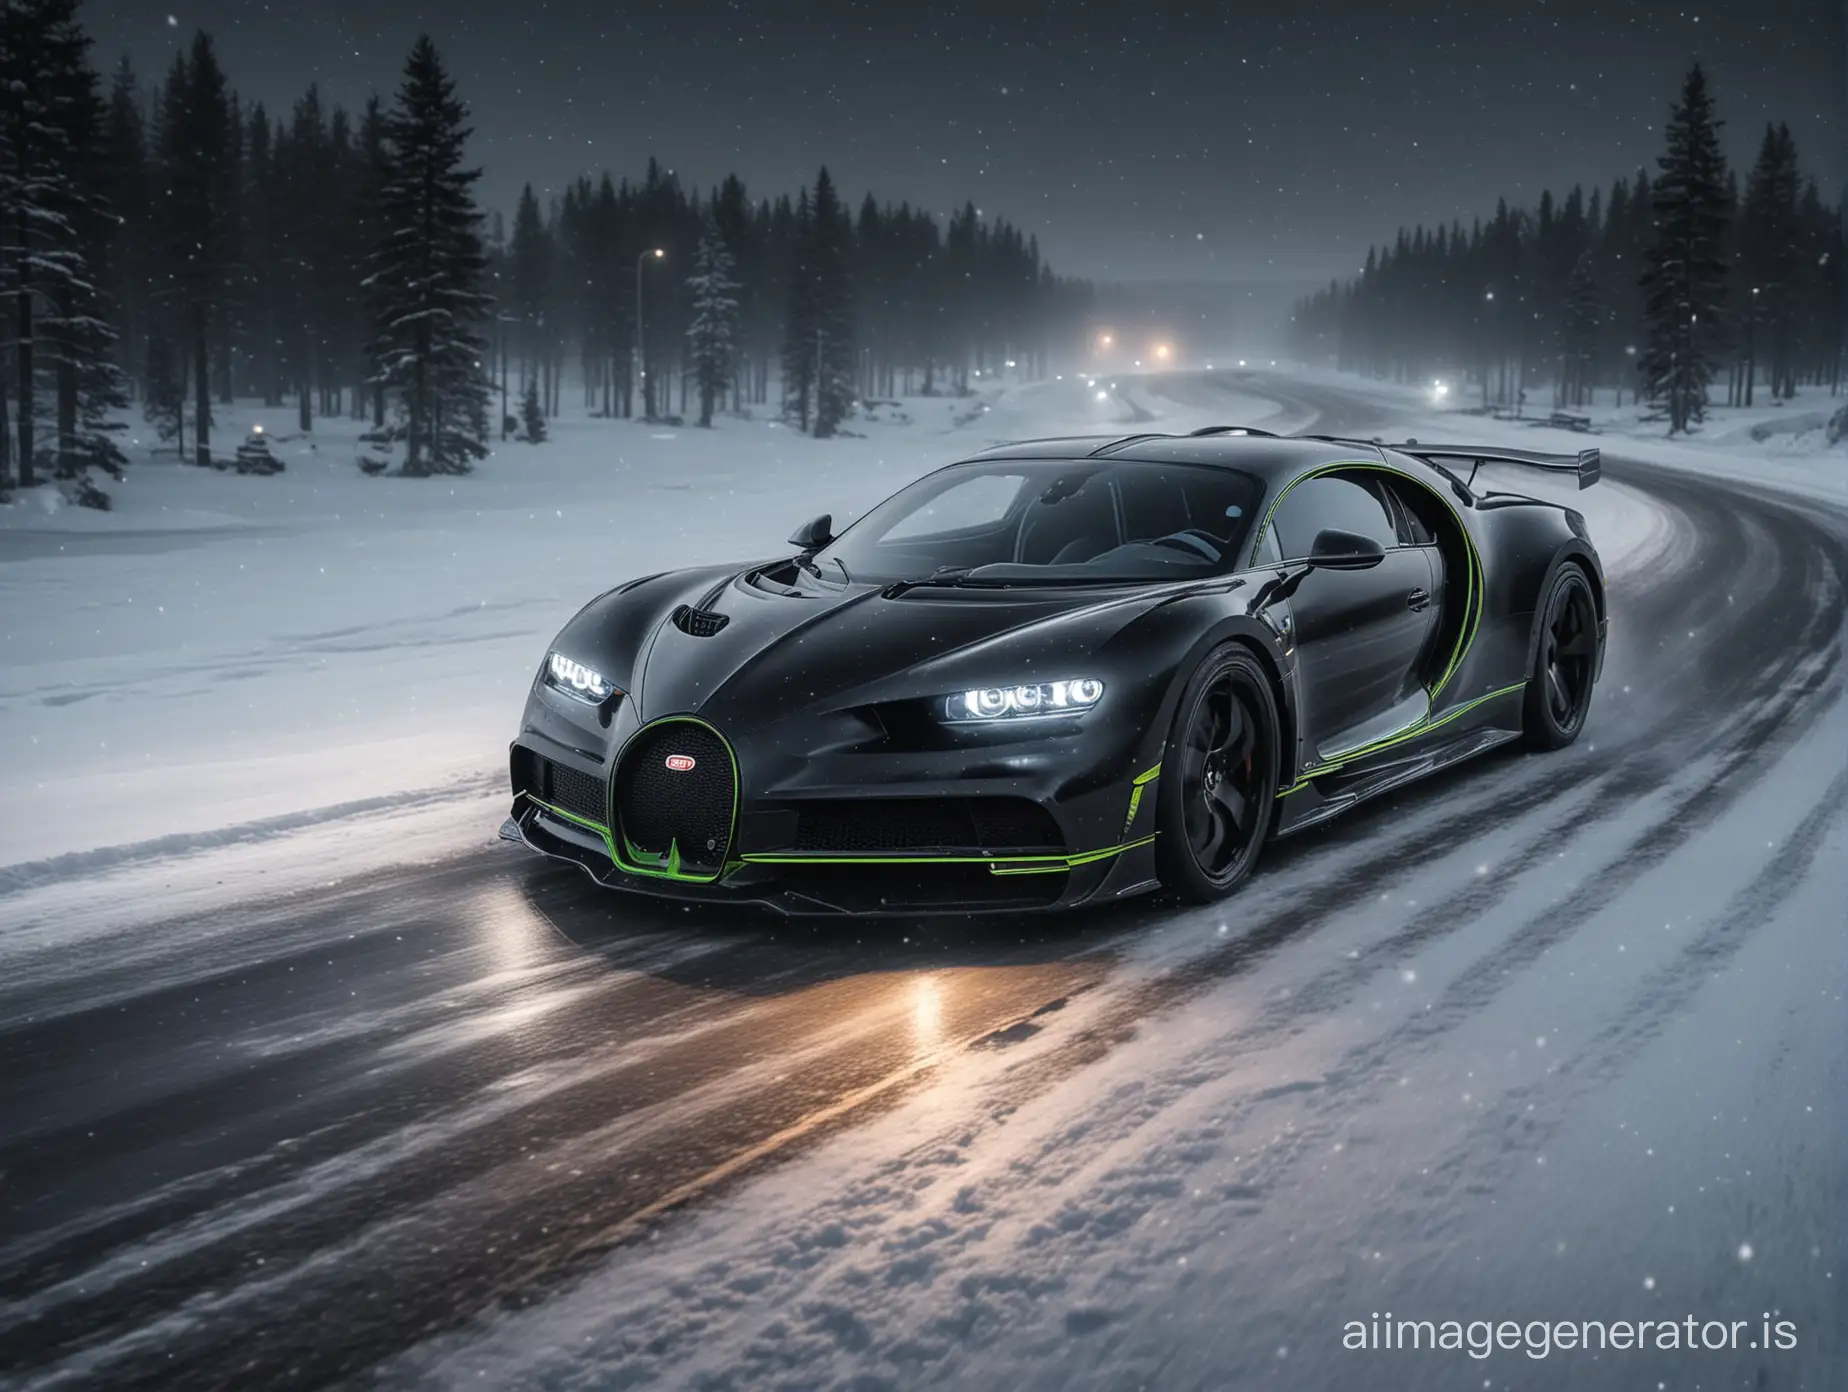 Luxury-Sports-Car-Drifting-at-Night-Bugatti-Chiron-and-Koenigsegg-Jesko-Concept